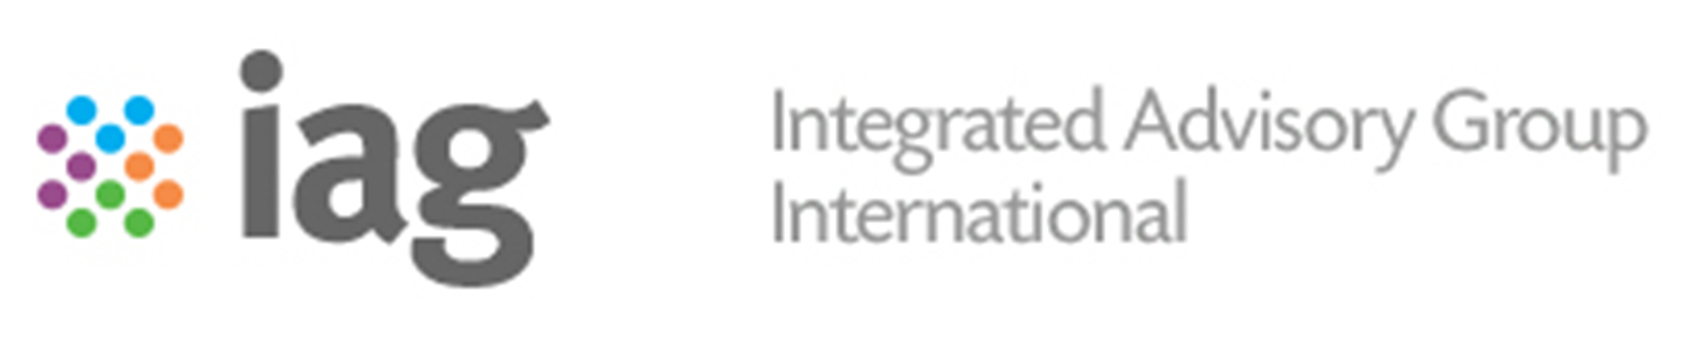 iag international logo